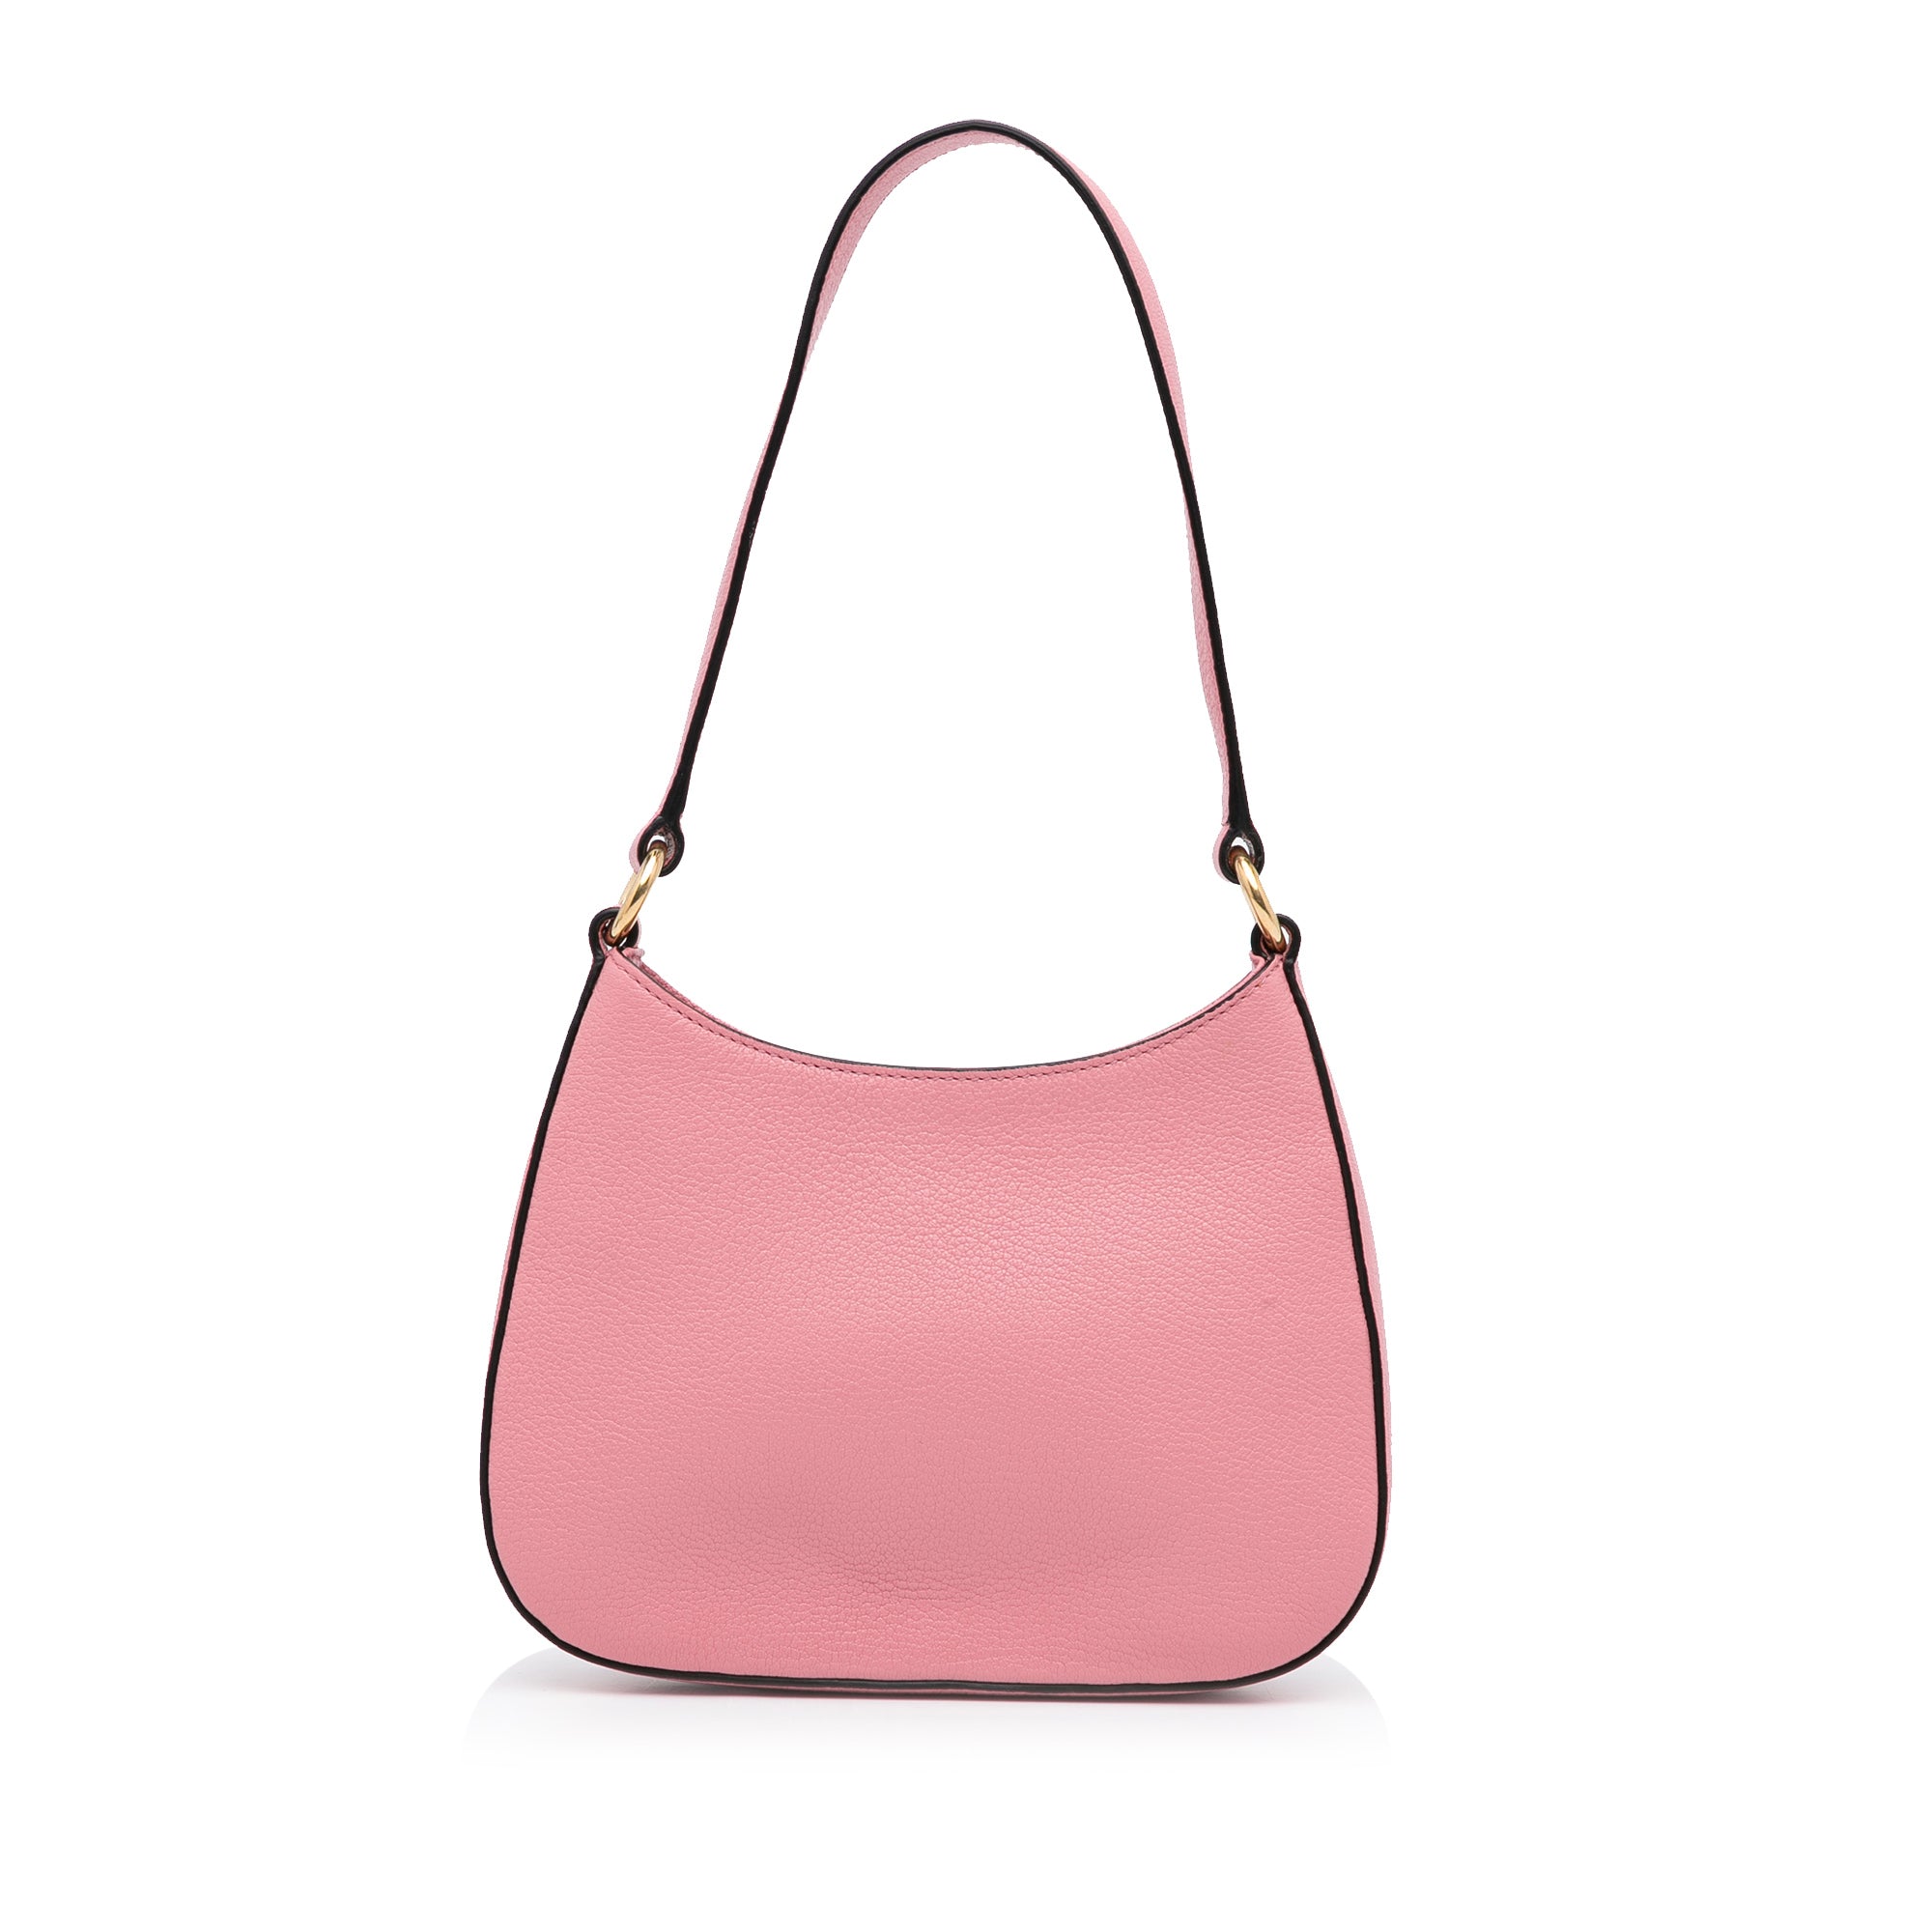 Miu Miu Pink/White leather Mini Madras Top Handle Bag